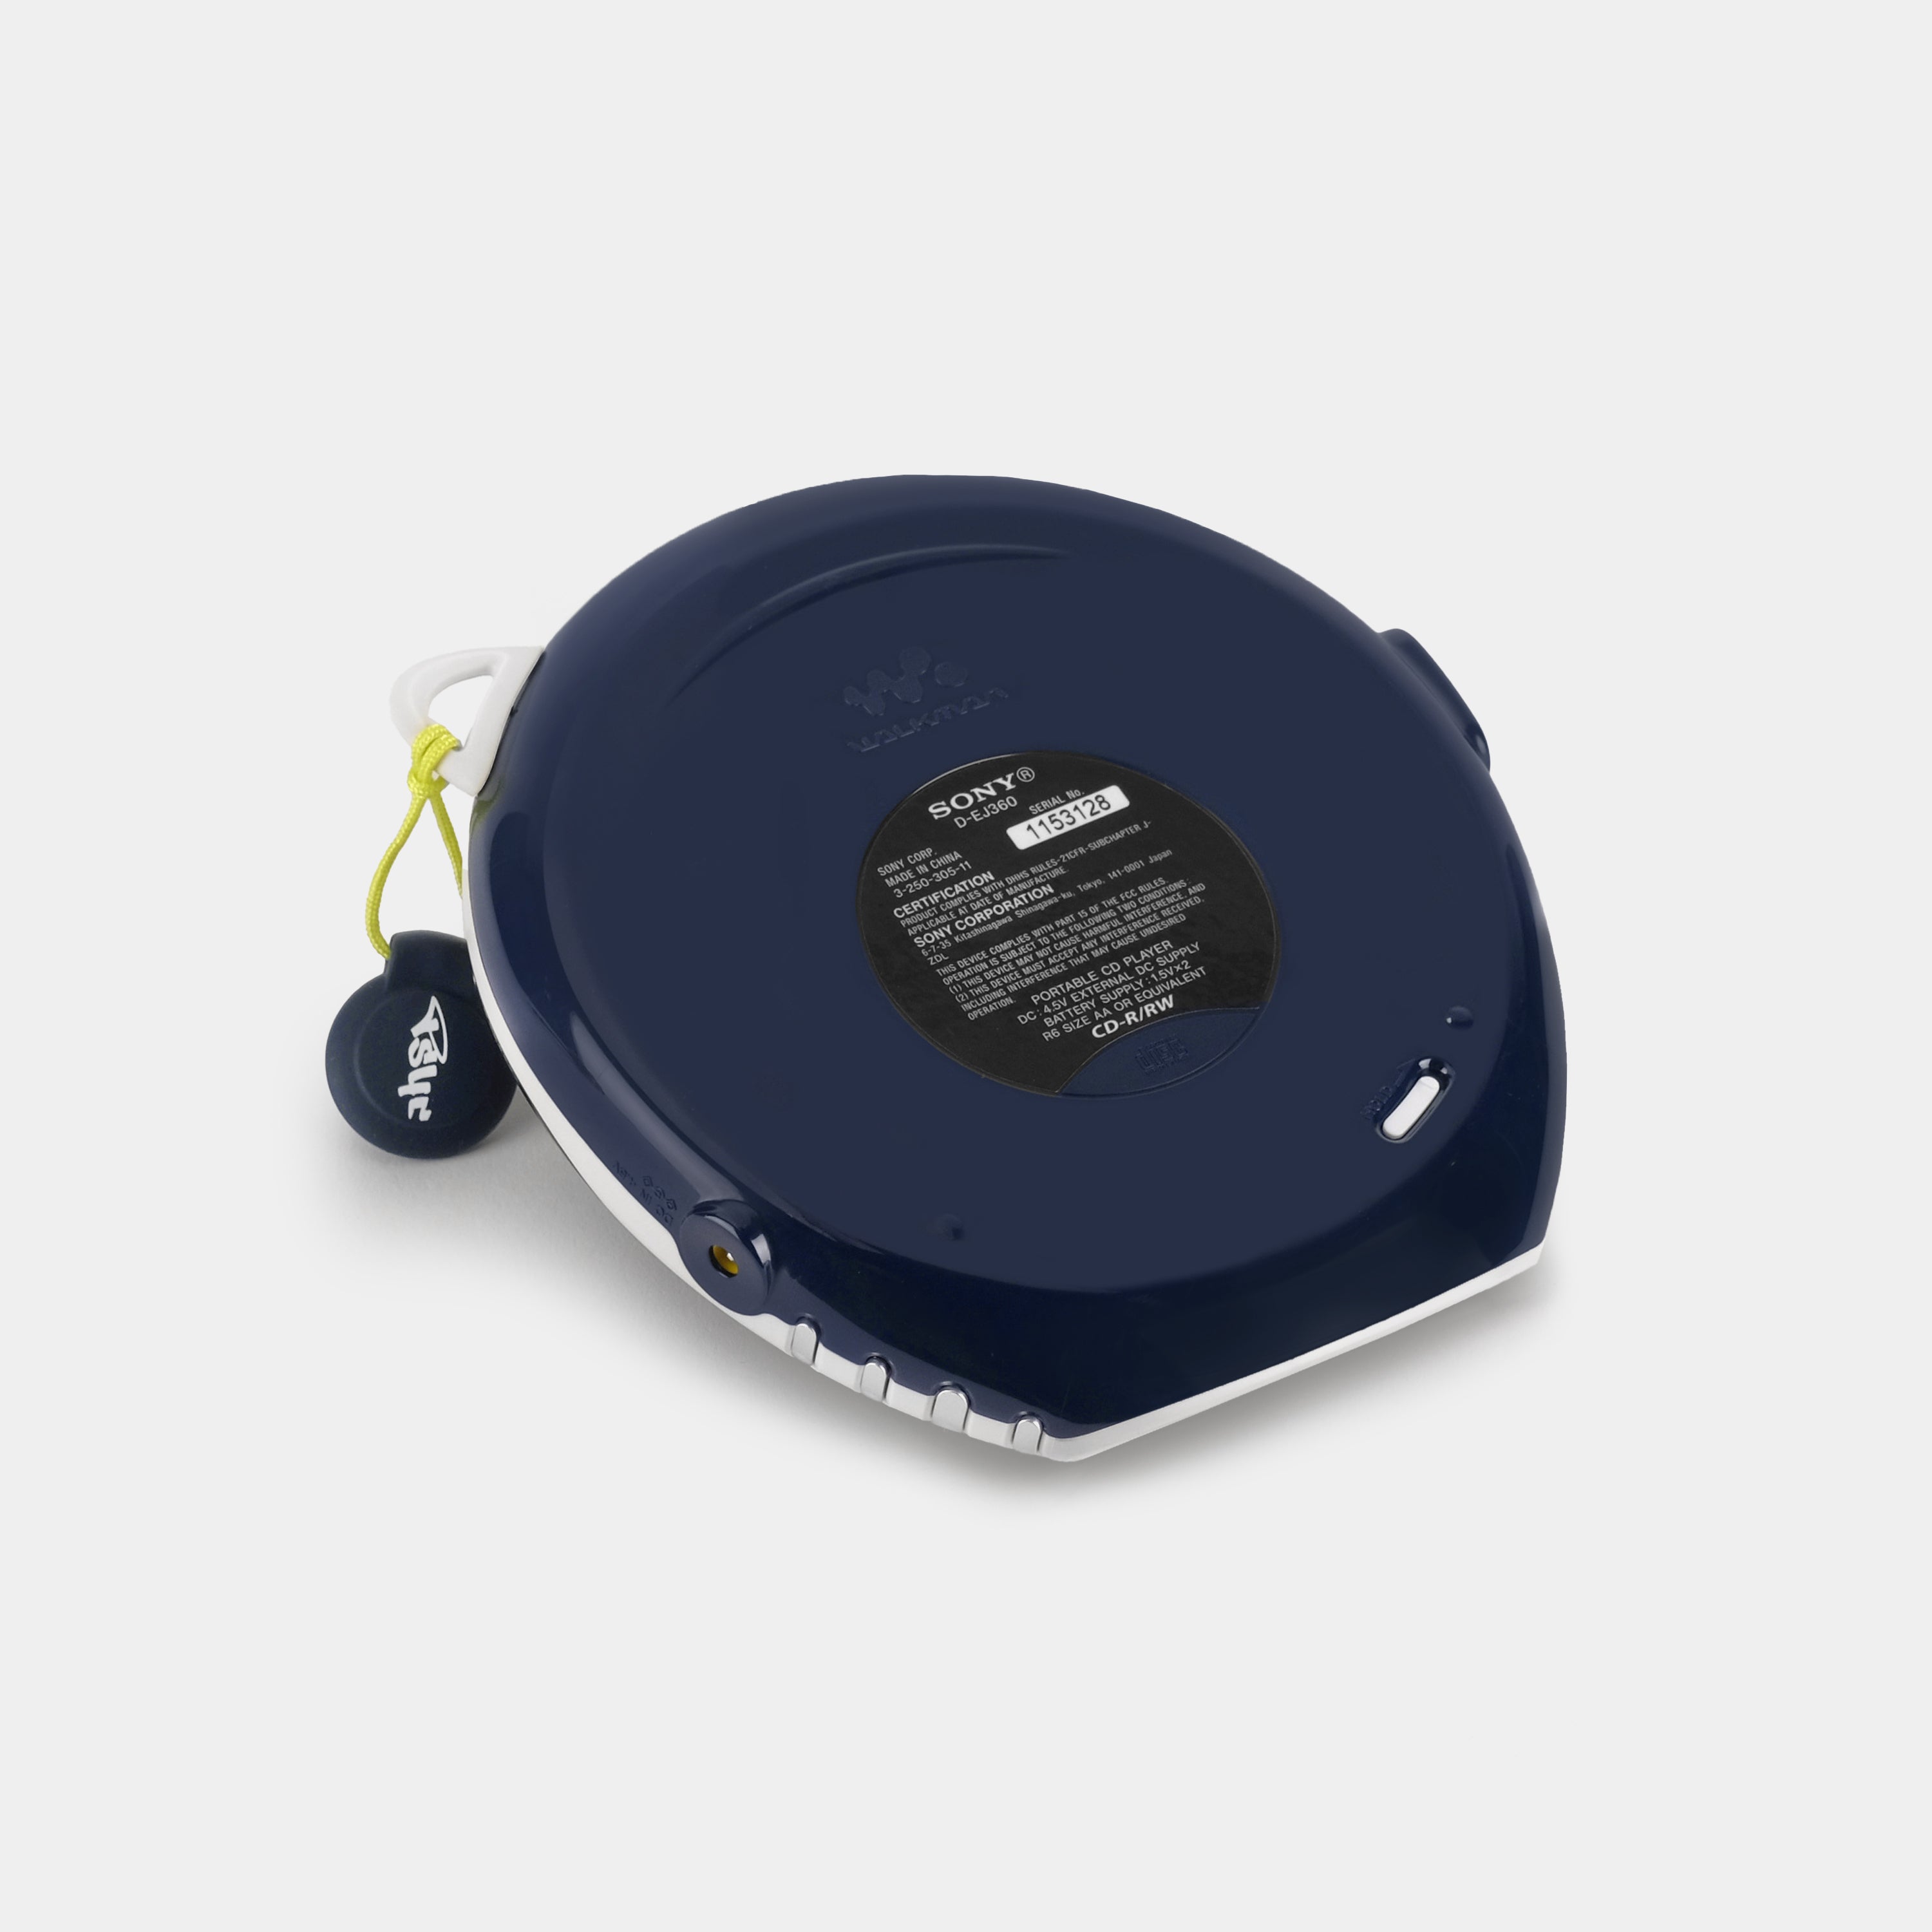 Sony Walkman D-EJ360 Navy Portable CD Player